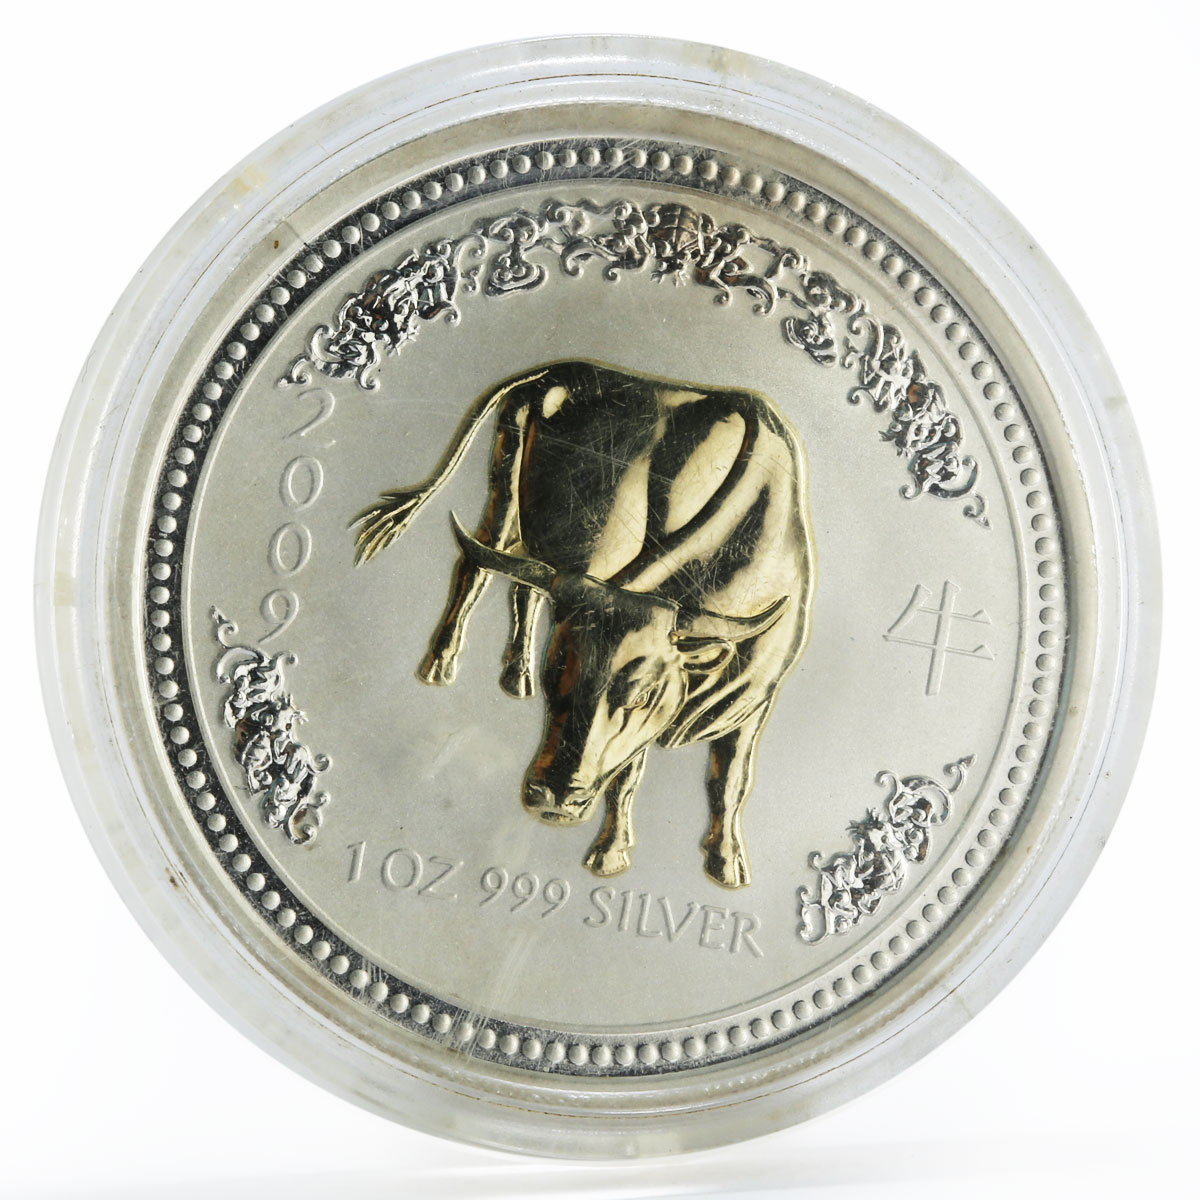 Australia 1 dollar Lunar Year of the Ox gilded silver coin 2007